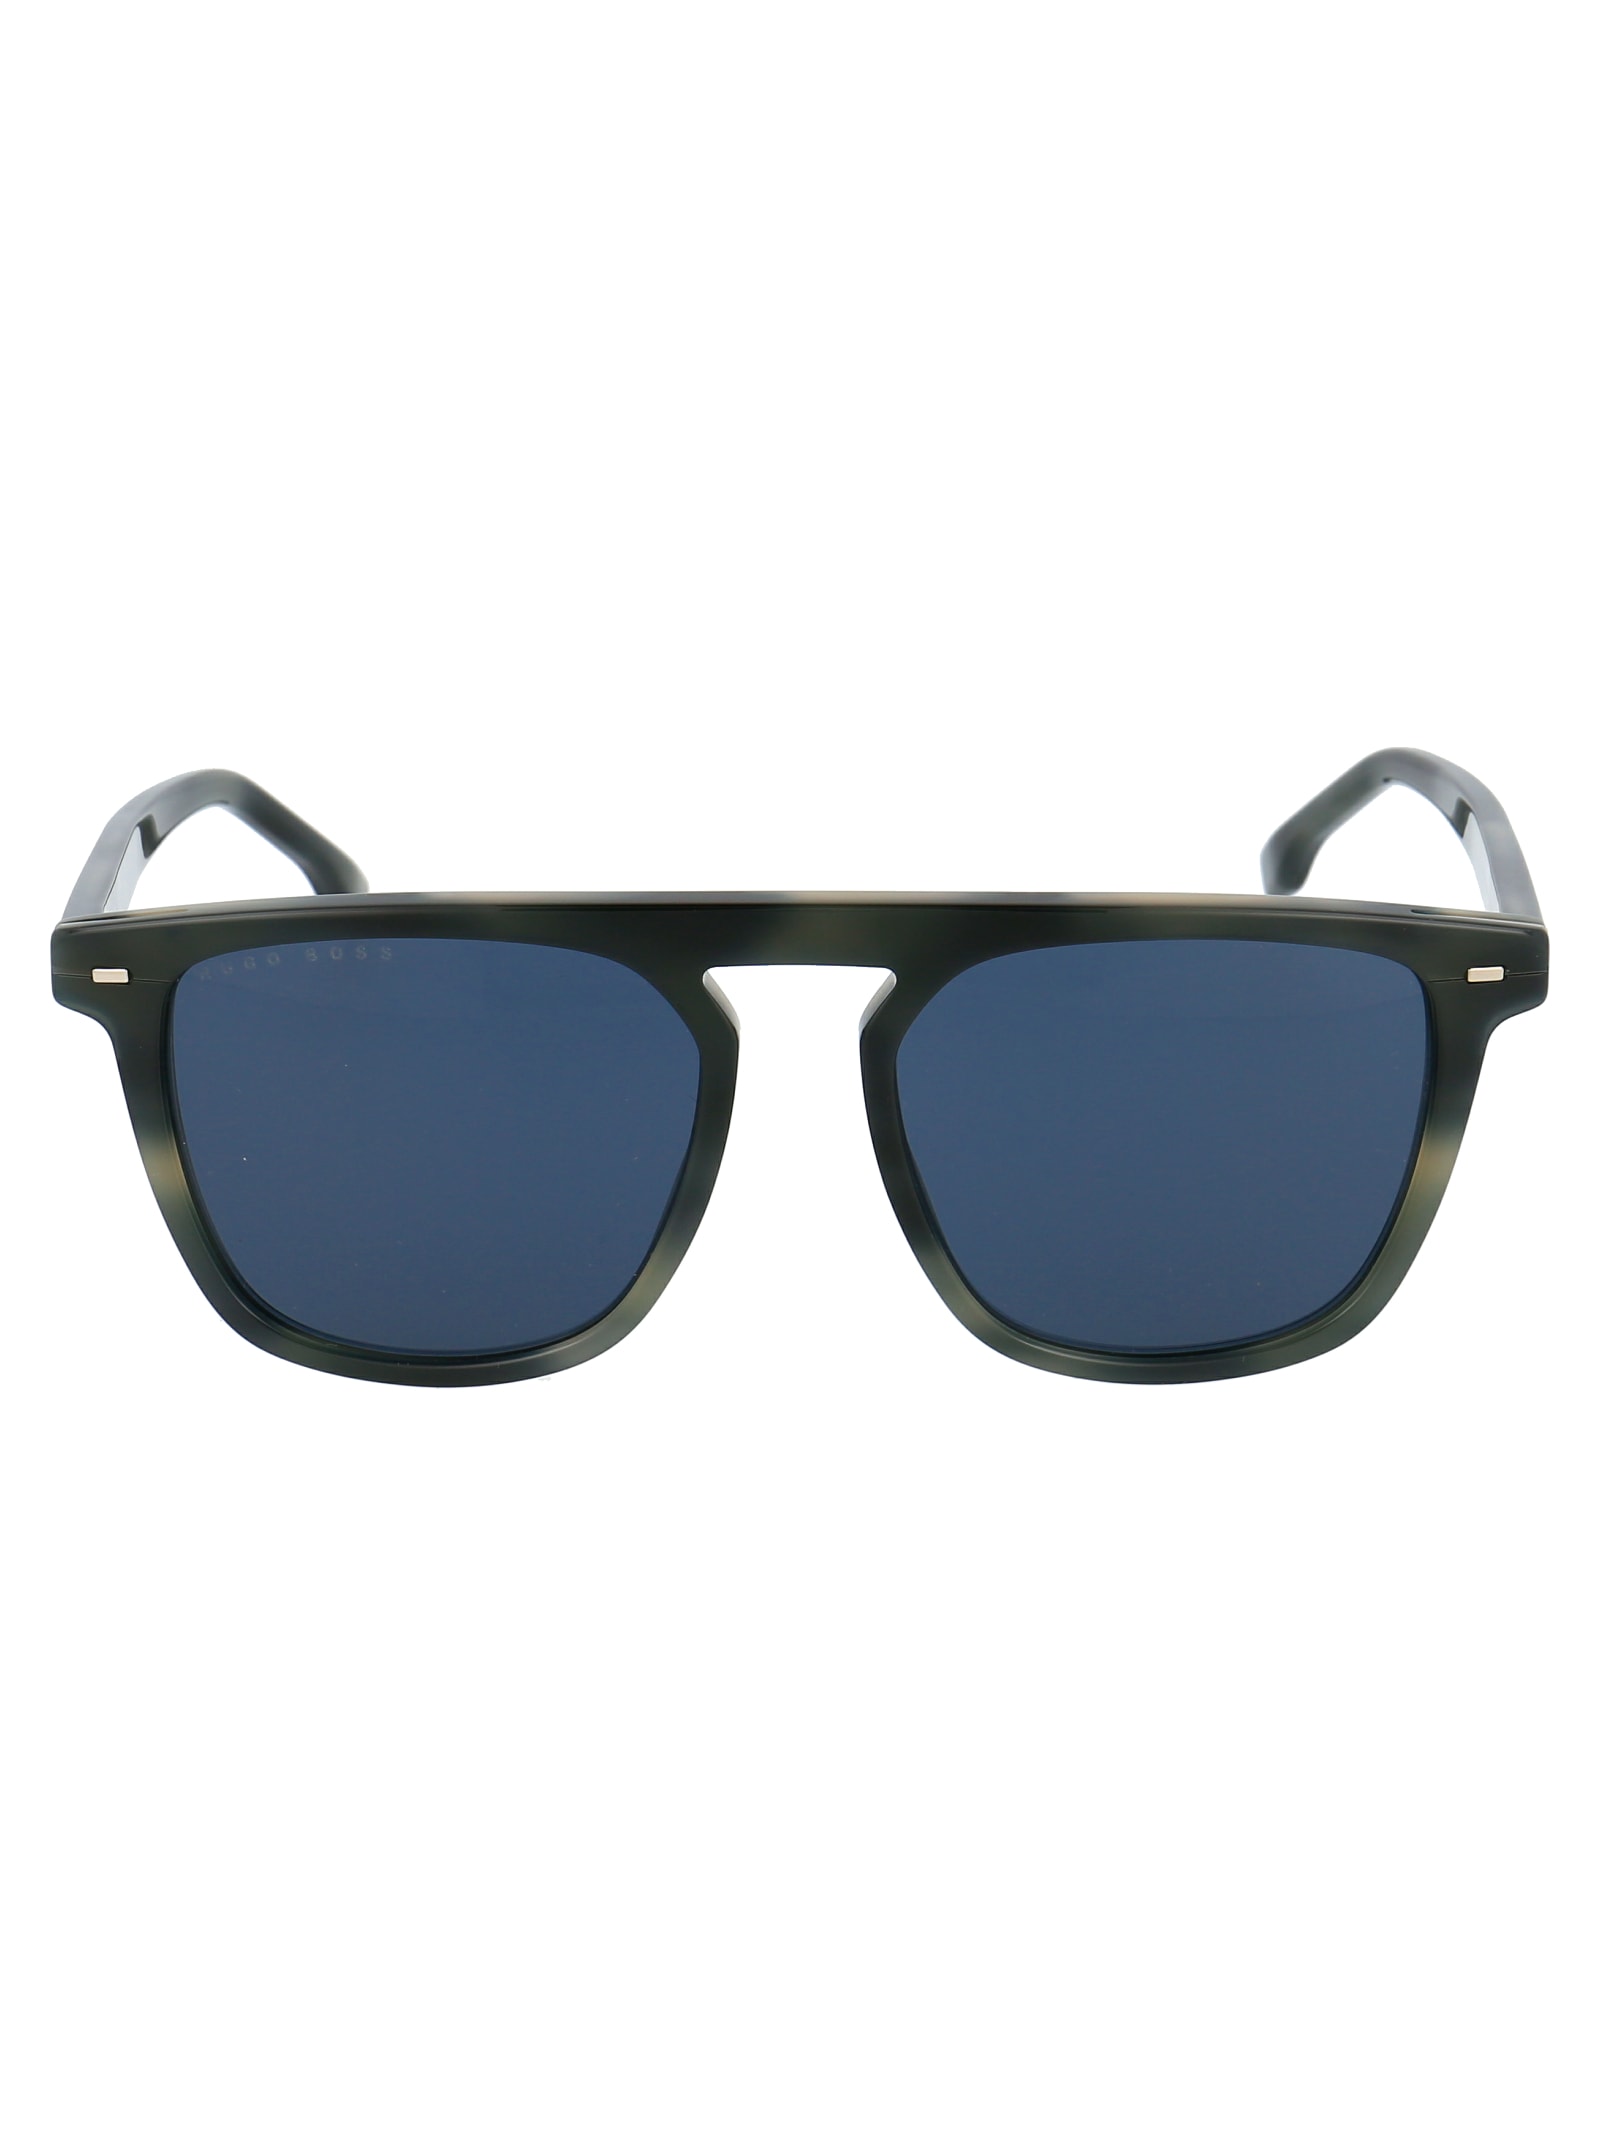 Boss 1127/s Sunglasses